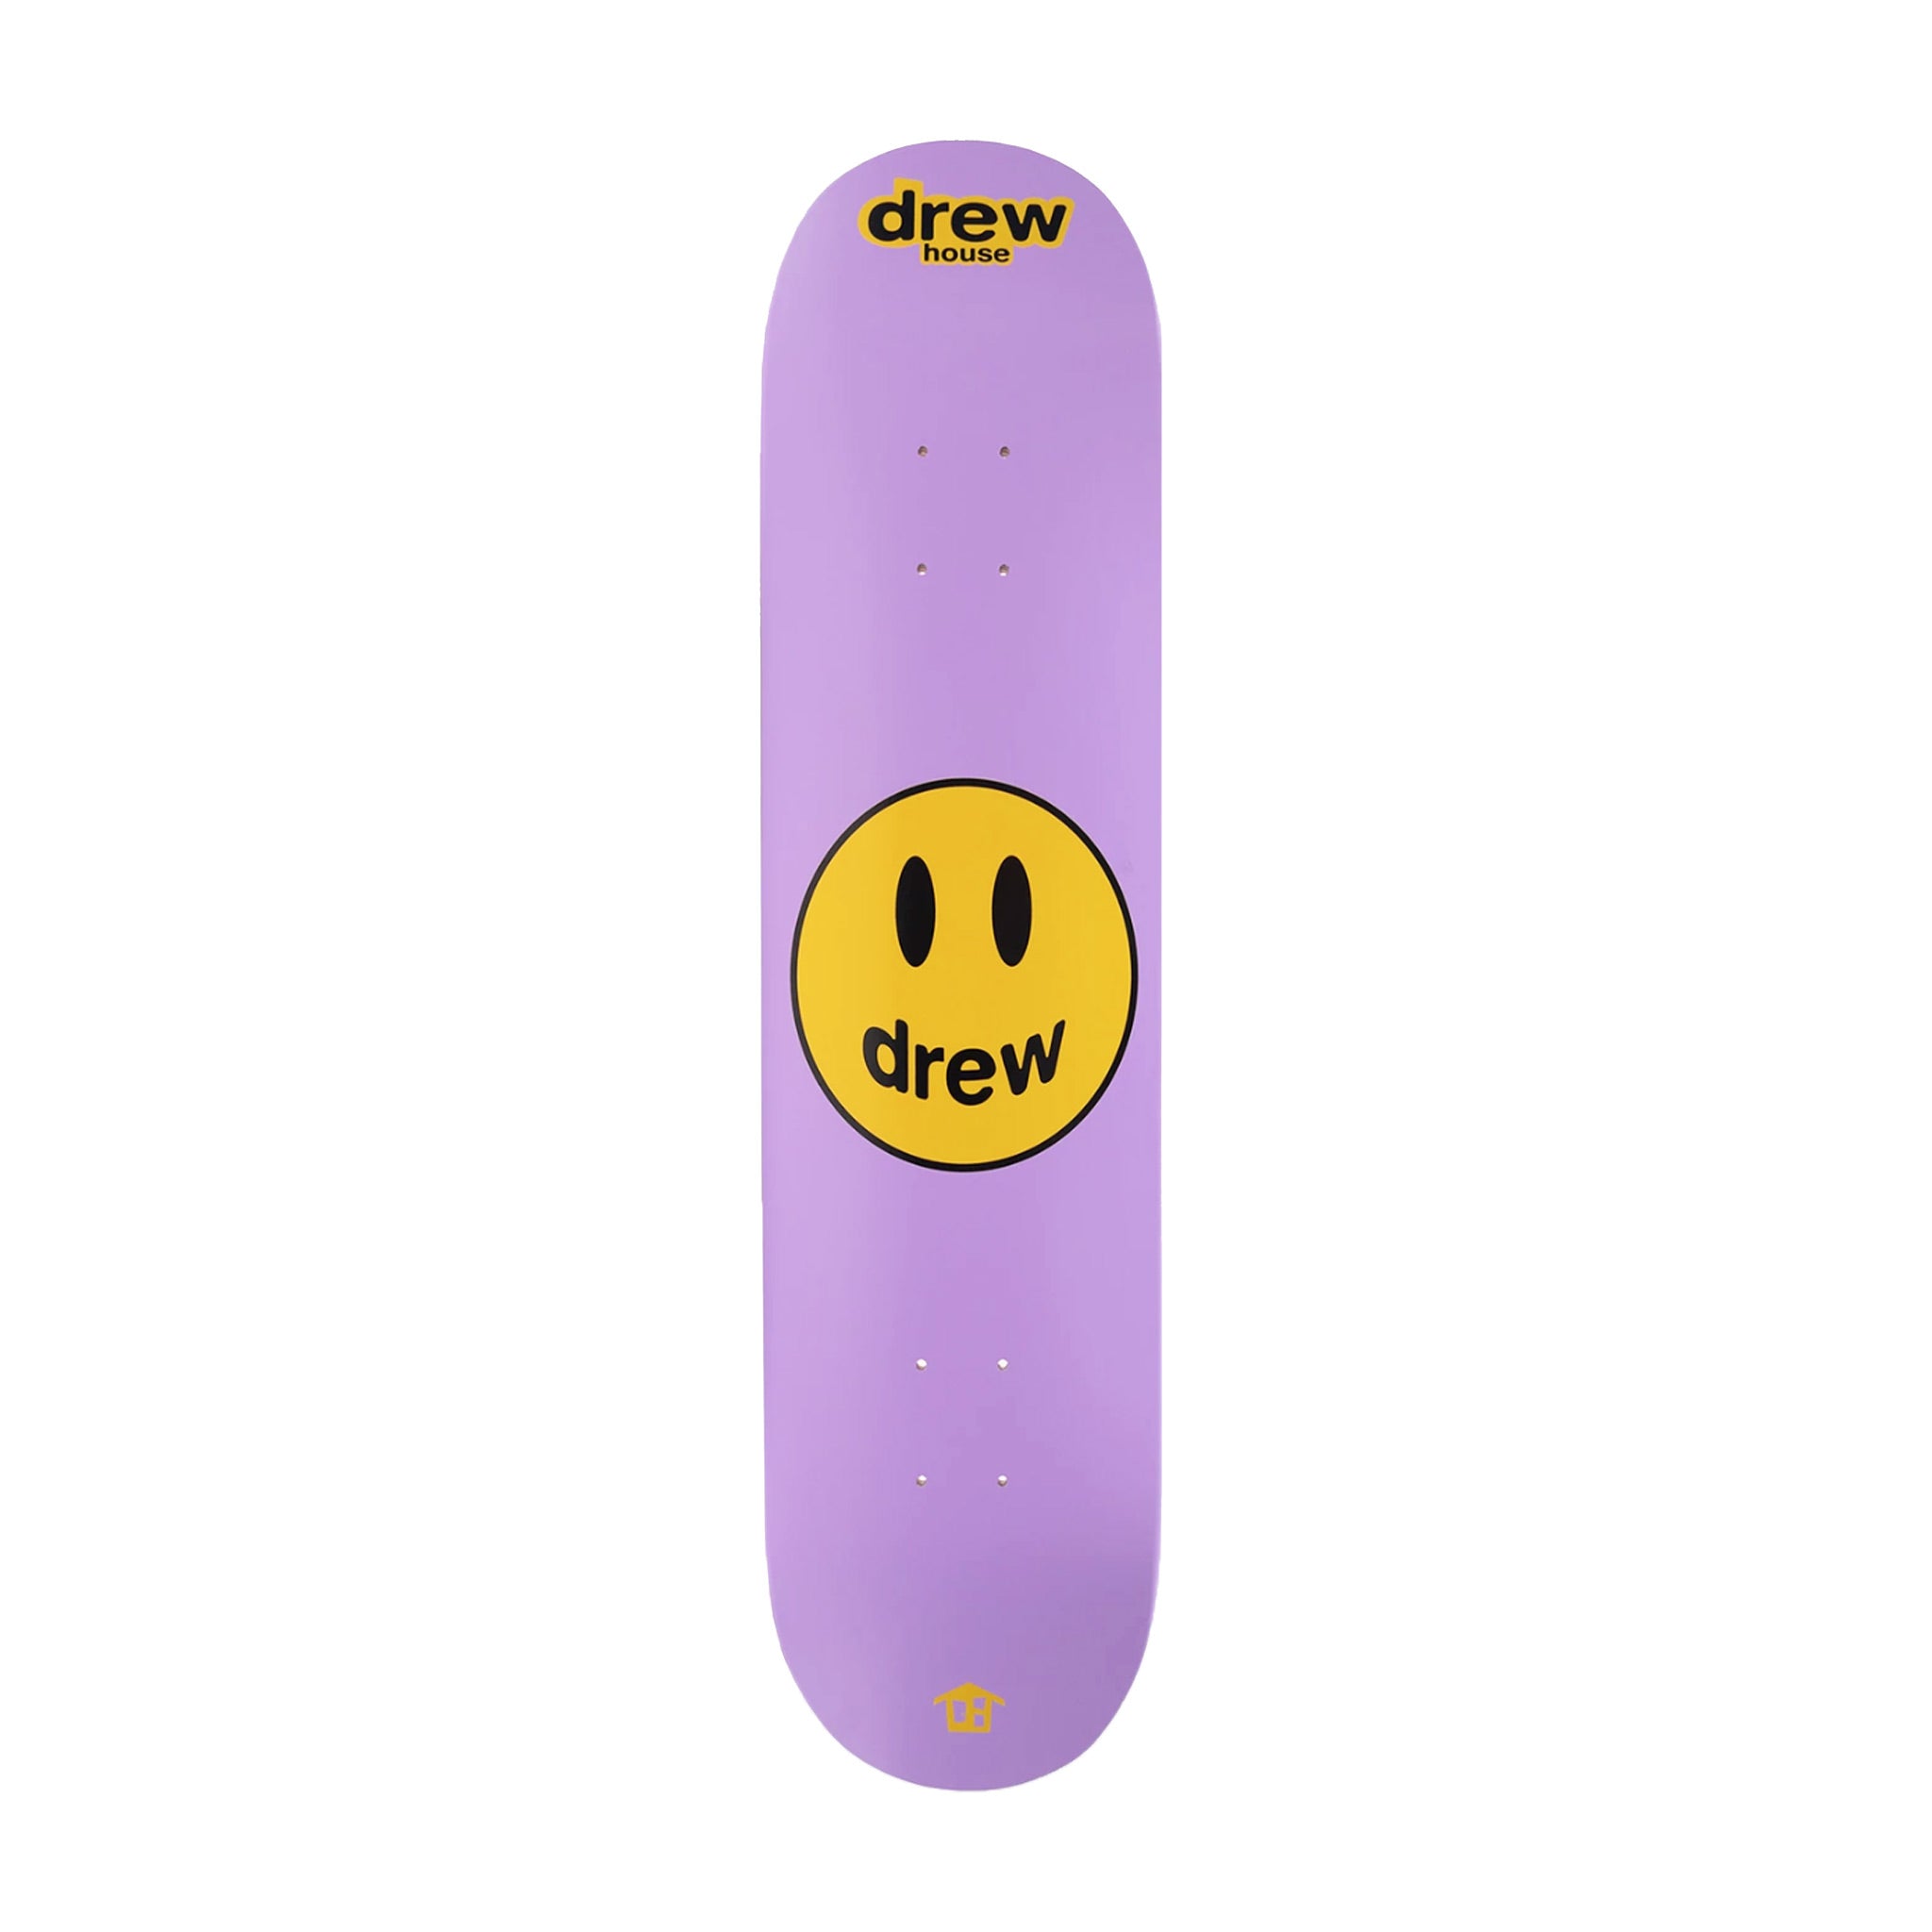 Drew House Mascot Skate Deck - Lavender | Australia New Zealand FRONT